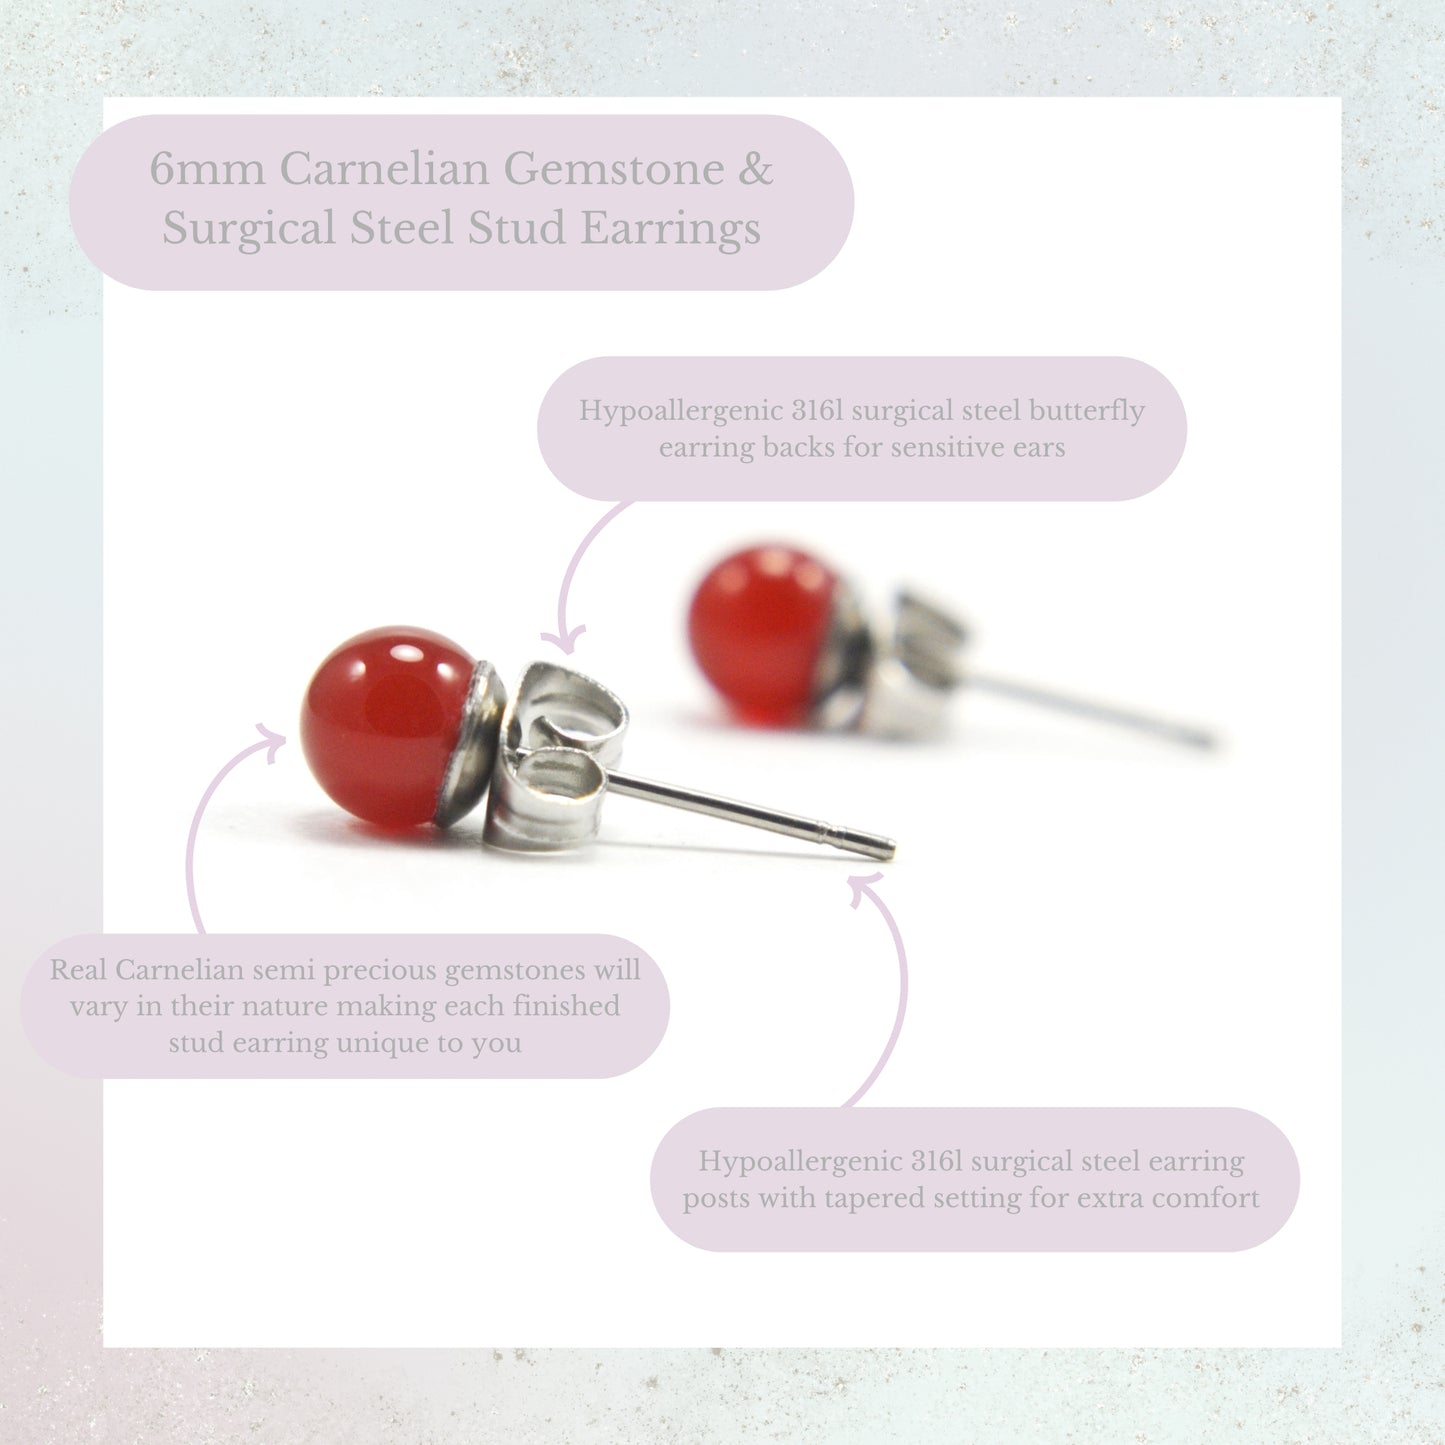 6mm Carnelian Gemstone & Surgical Steel Stud Earrings Product Information Graphic